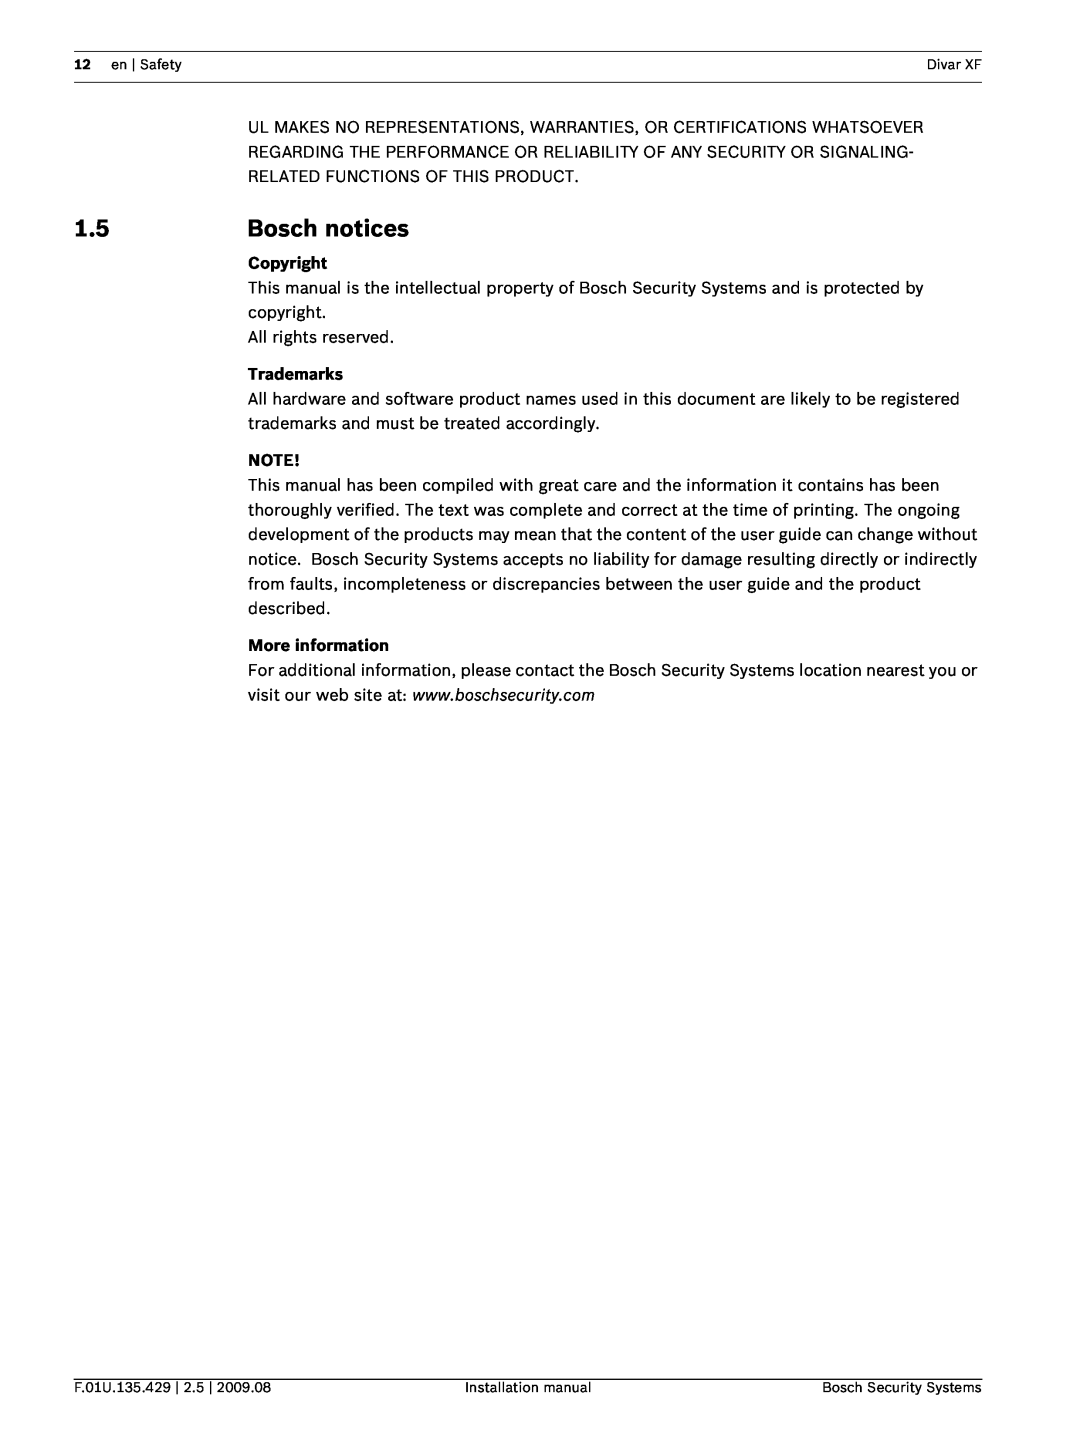 Bosch Appliances XF installation manual Bosch notices, Copyright, Trademarks, More information 